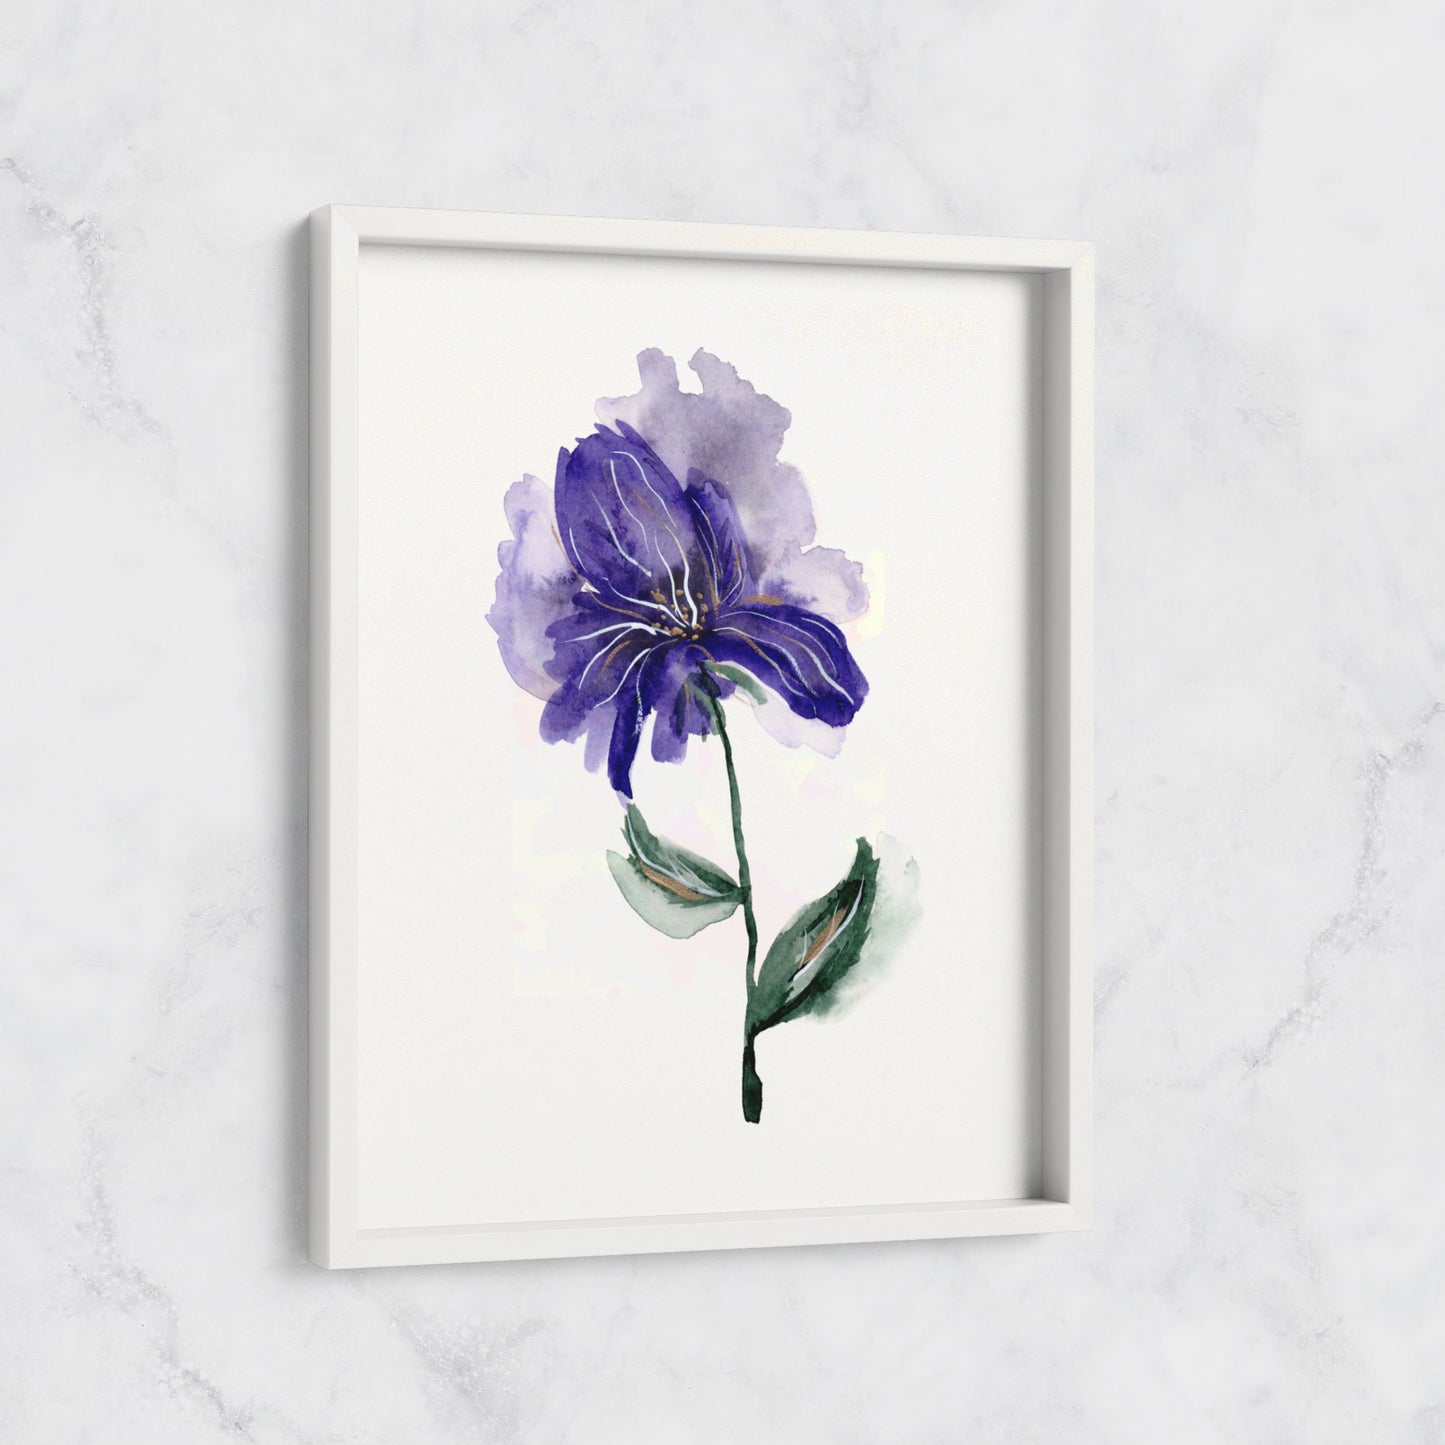 Loose Iris - Print